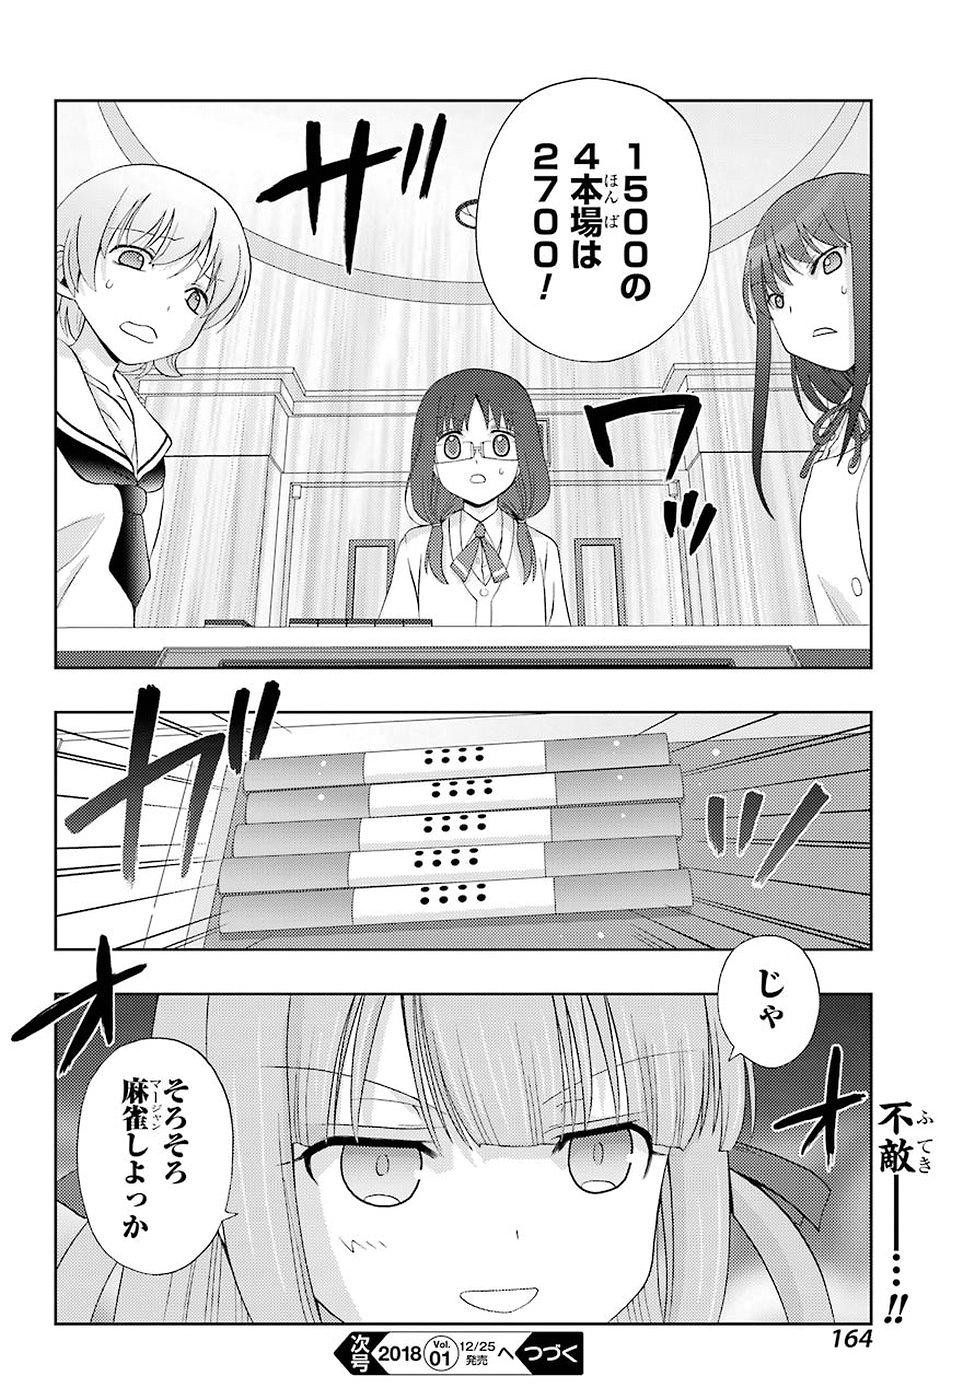 Shinohayu - The Dawn of Age Manga - Chapter 051 - Page 28